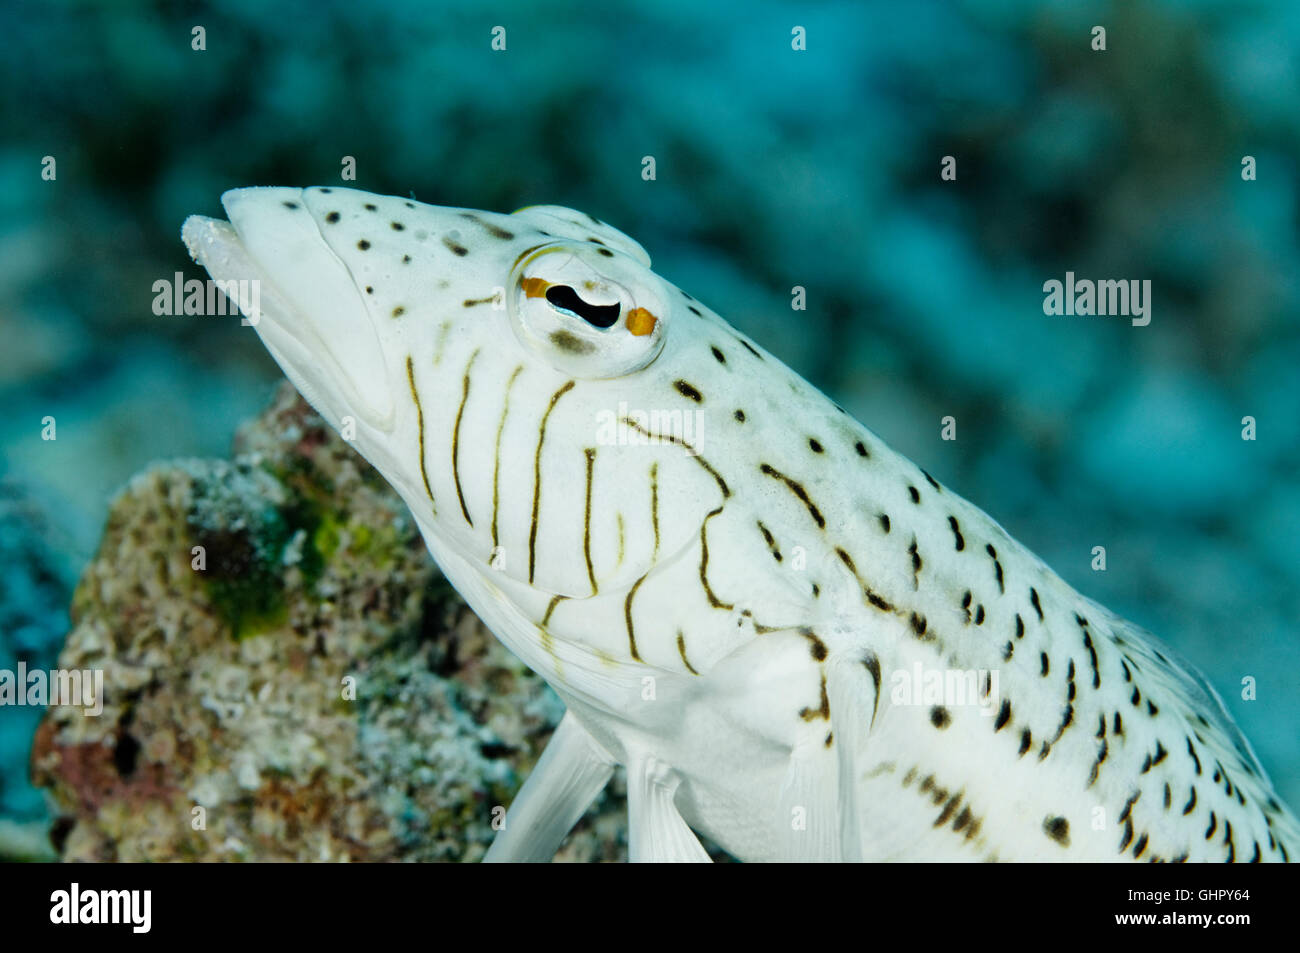 Parapercis hexophtalma, chiazzato sandperch maschio, Paradise Reef, Mar Rosso, Egitto, Africa Foto Stock